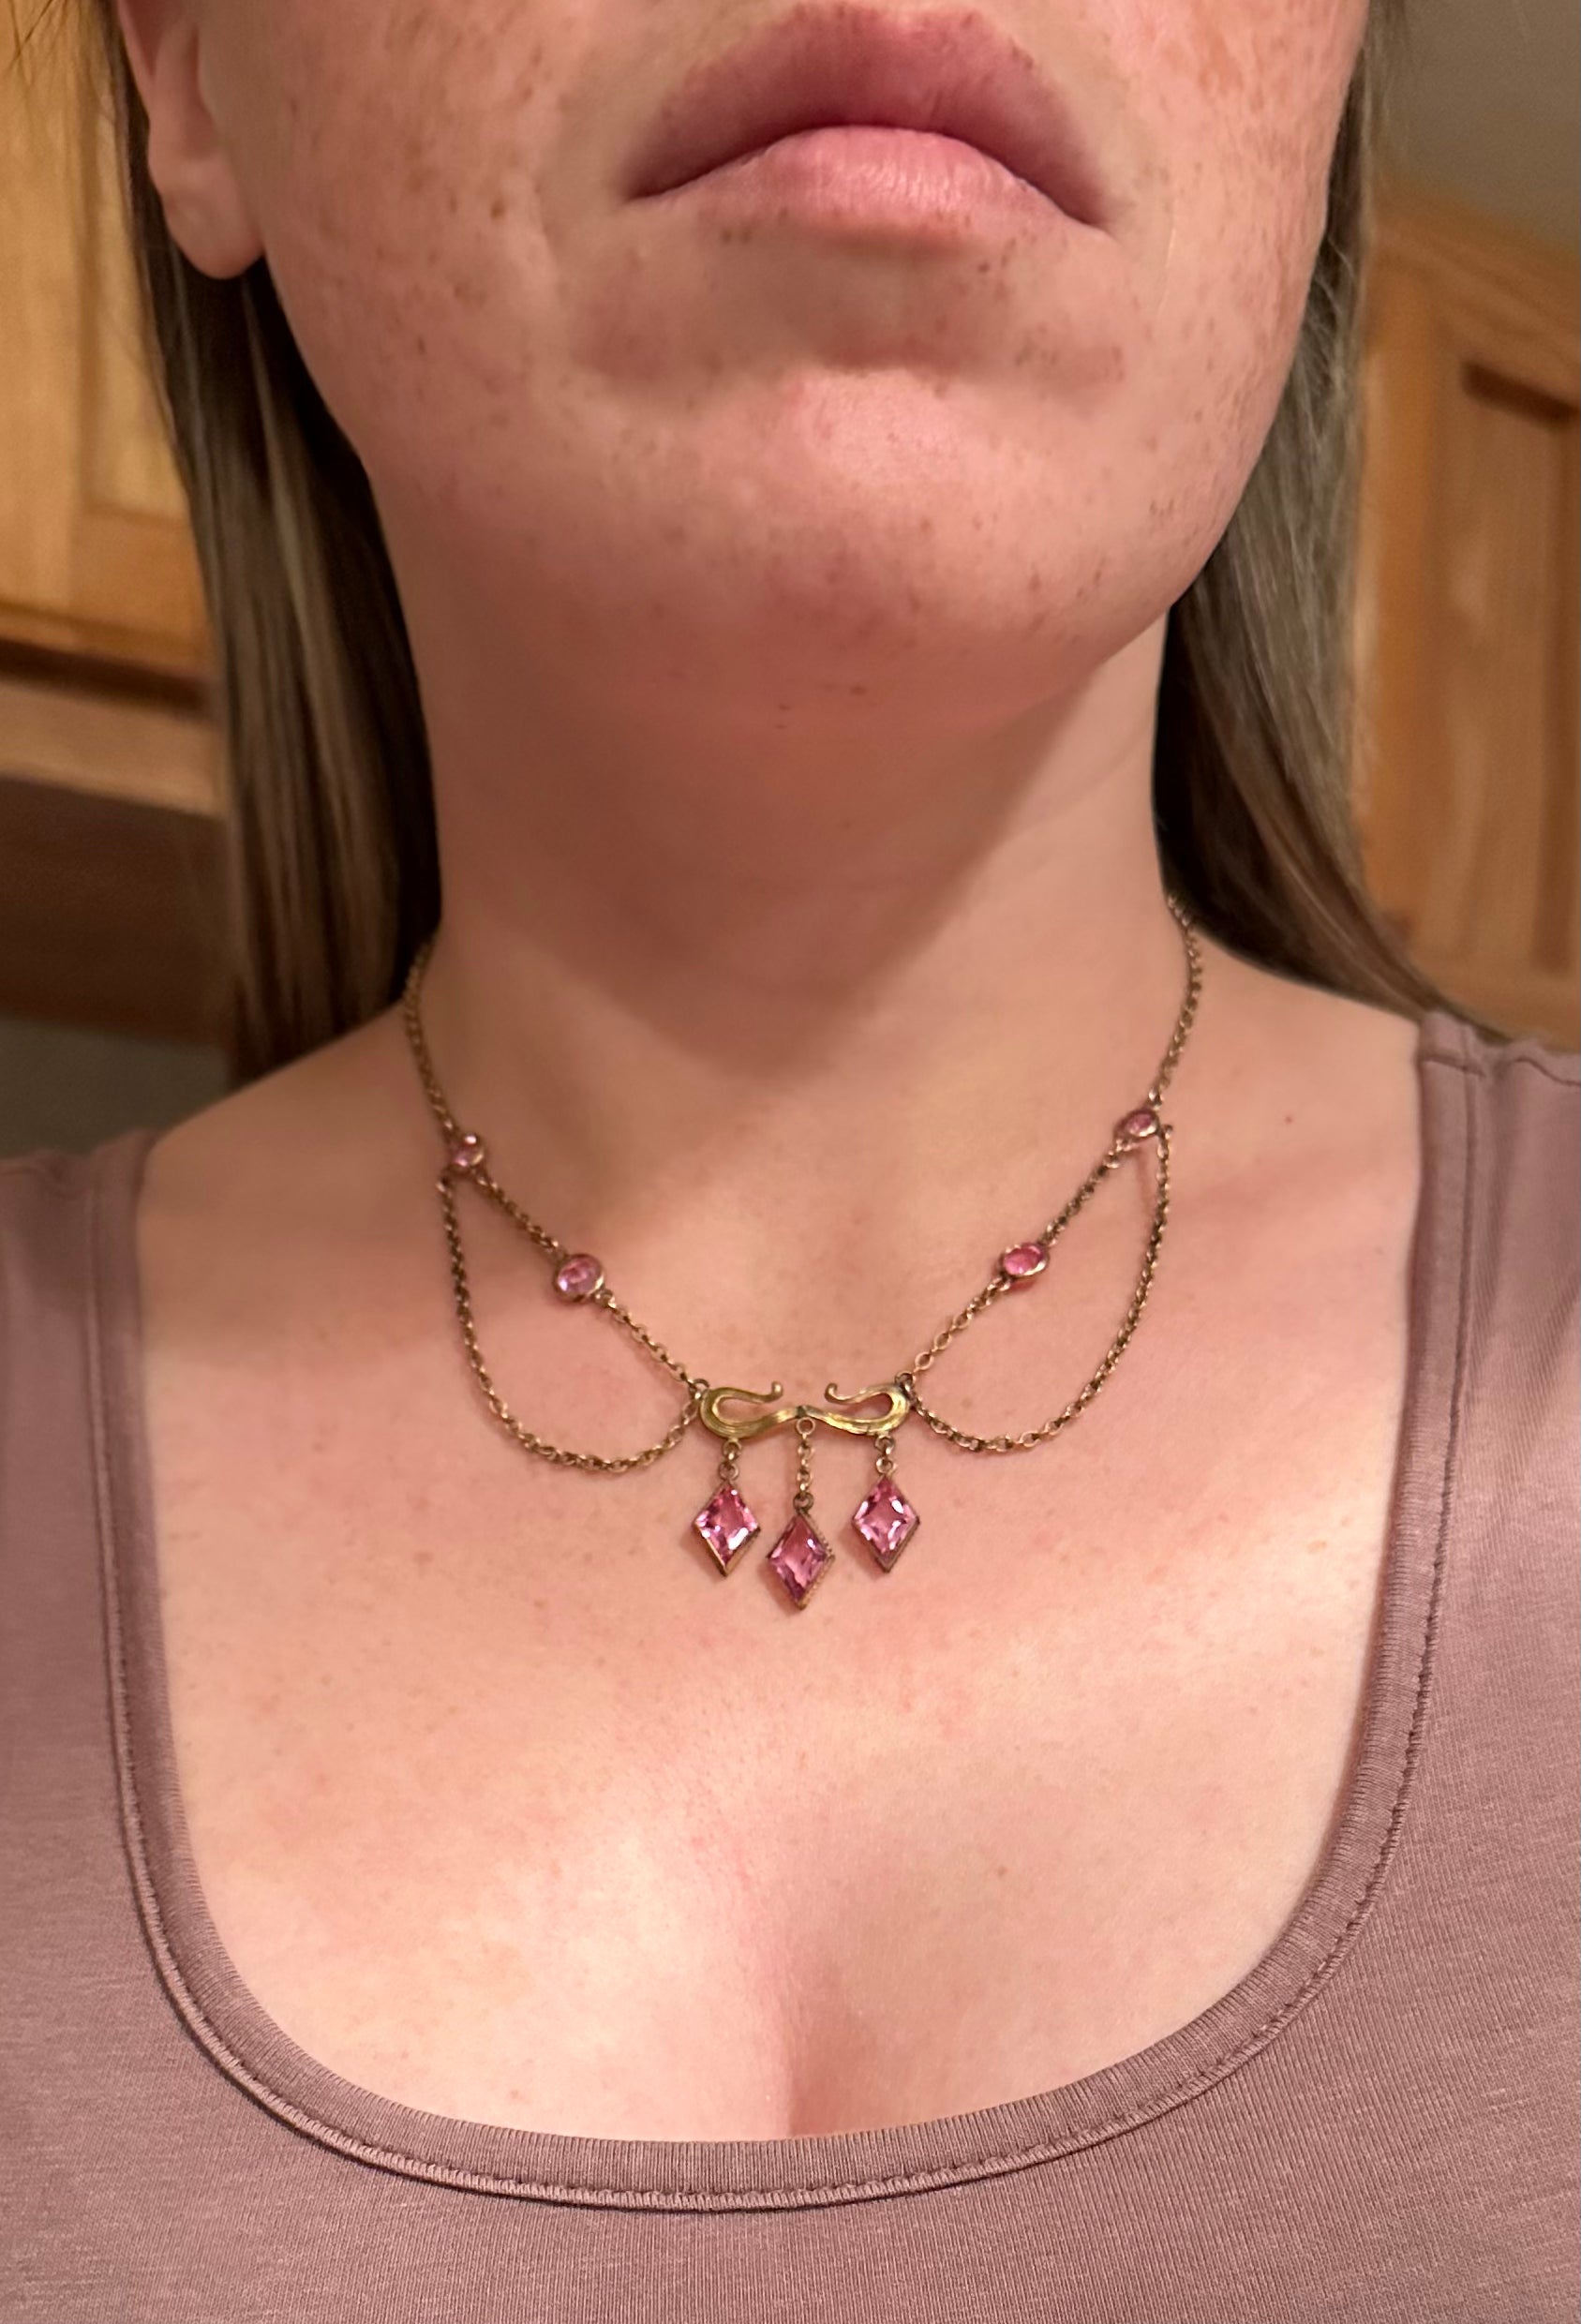 Antique Victorian gold filled pink tourmaline glass festoon necklace, 15.5